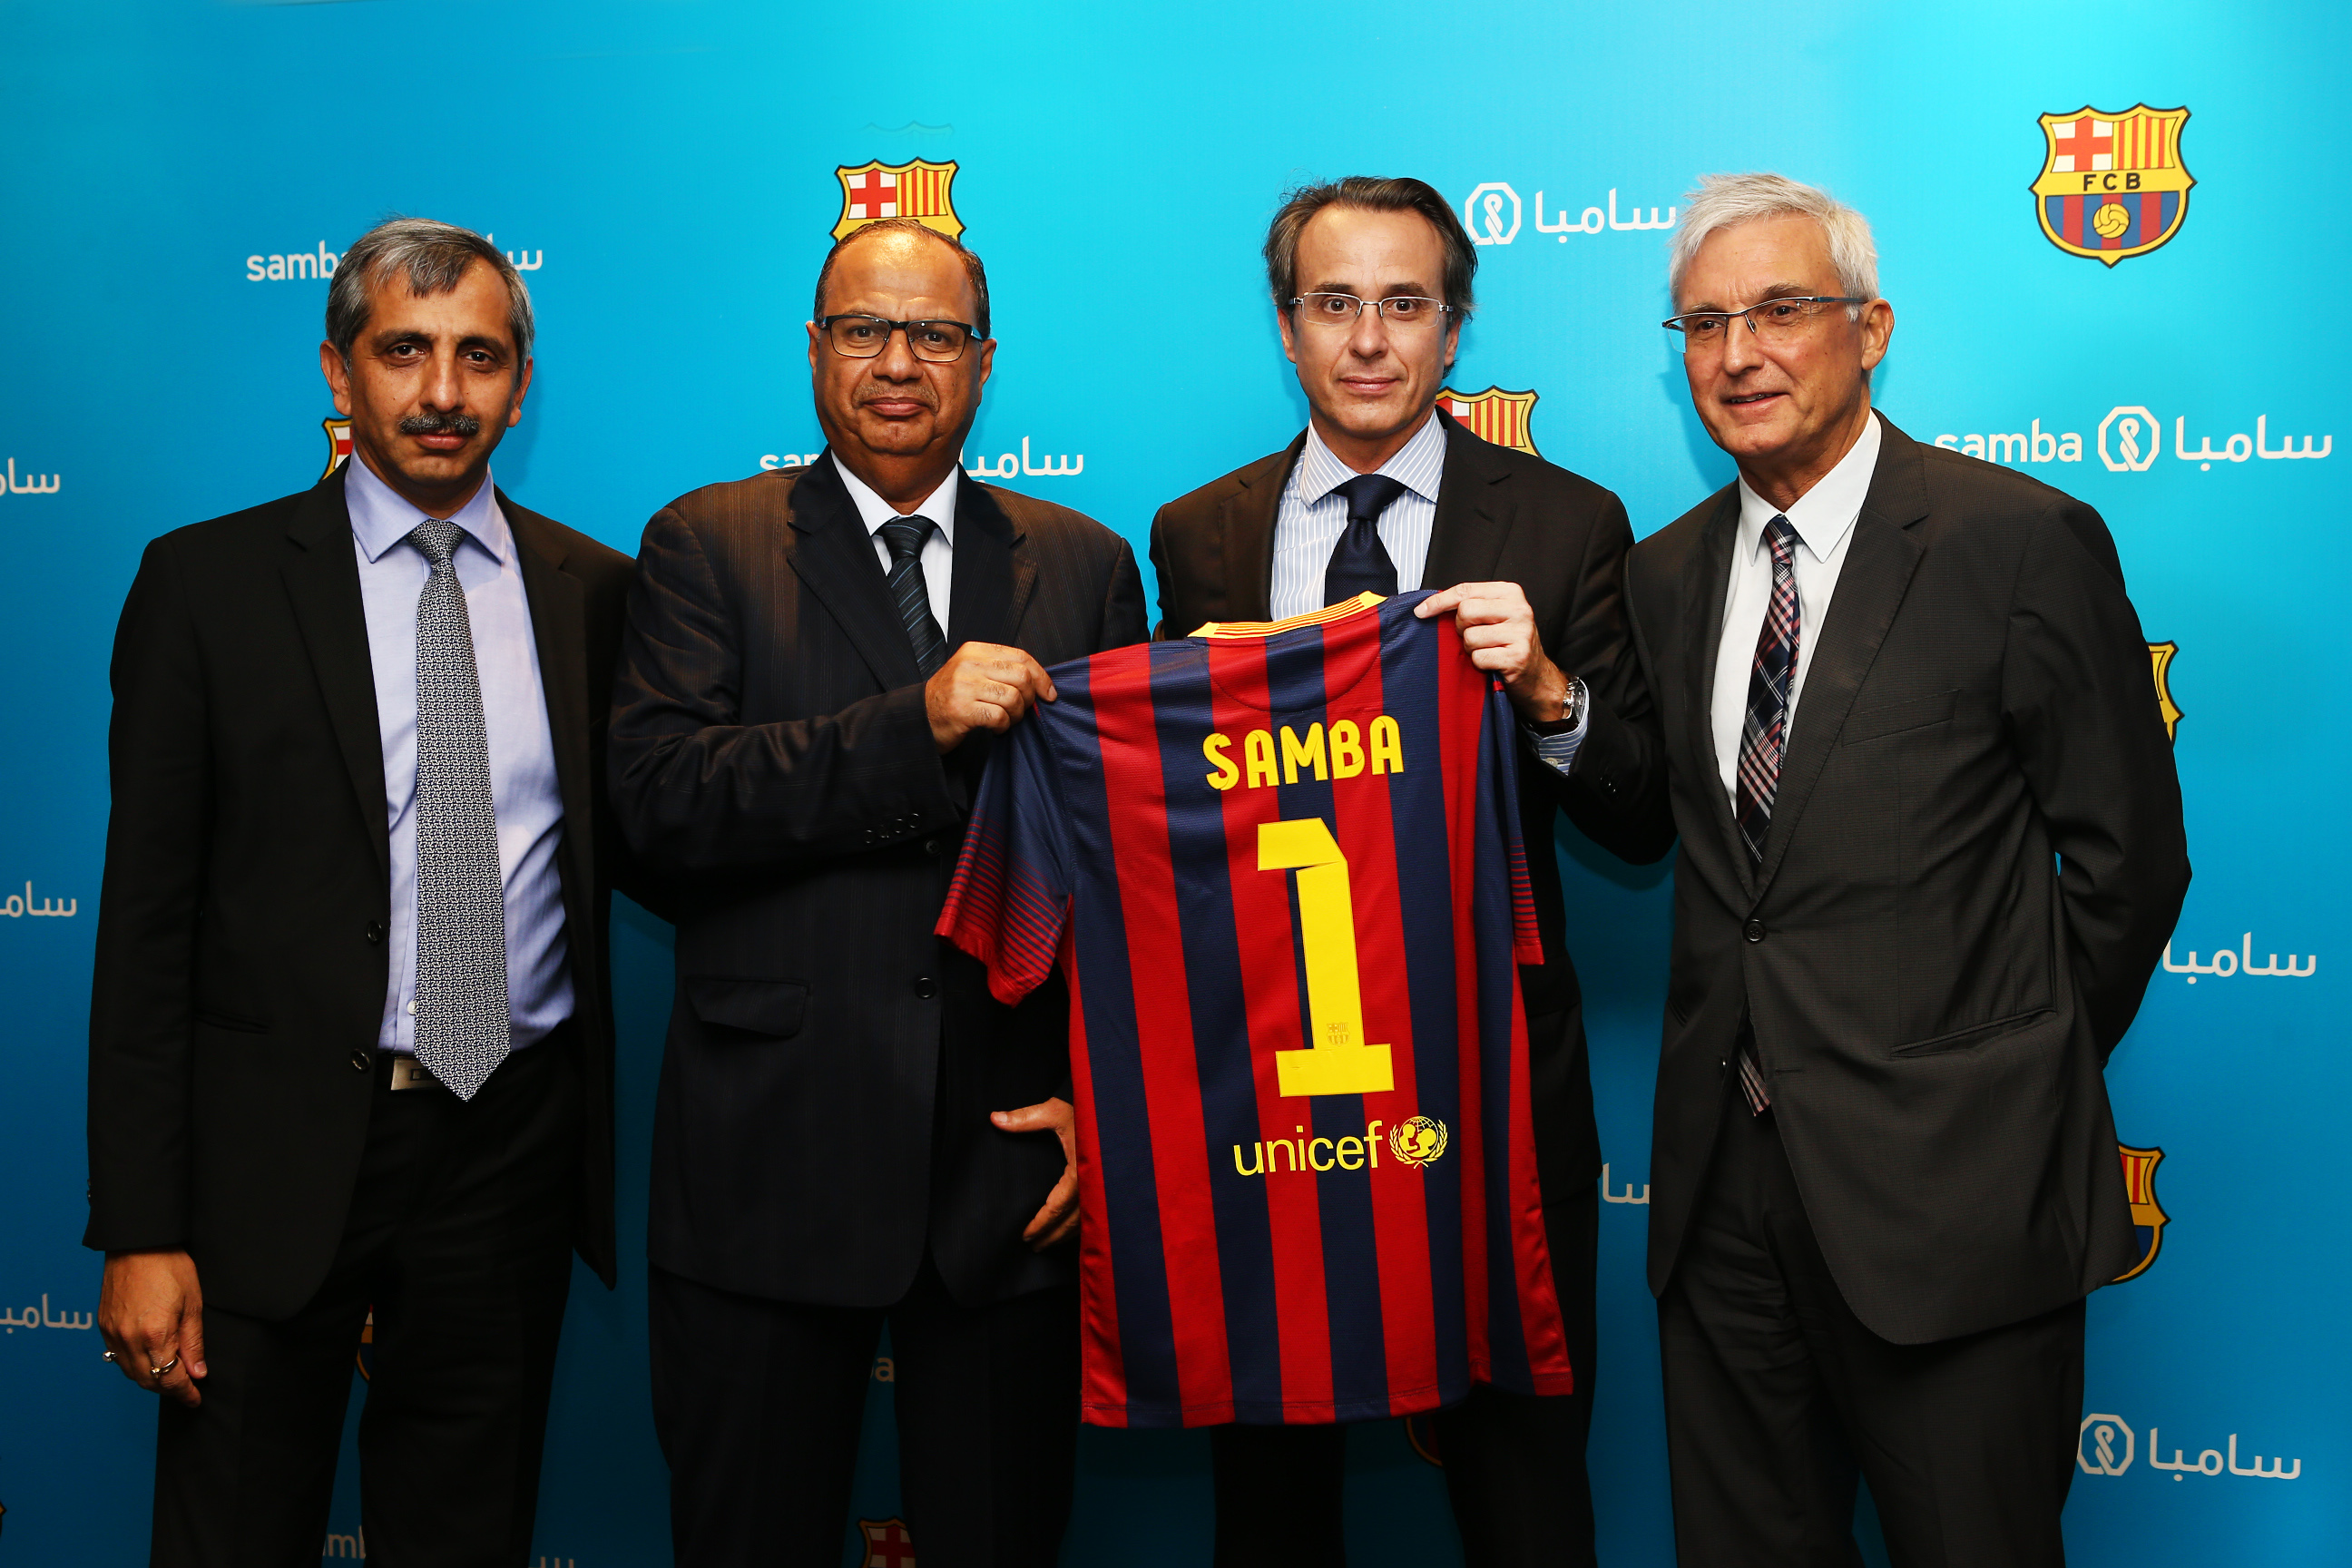 Sponsorship Agreement With Samba In Saudi Arabia